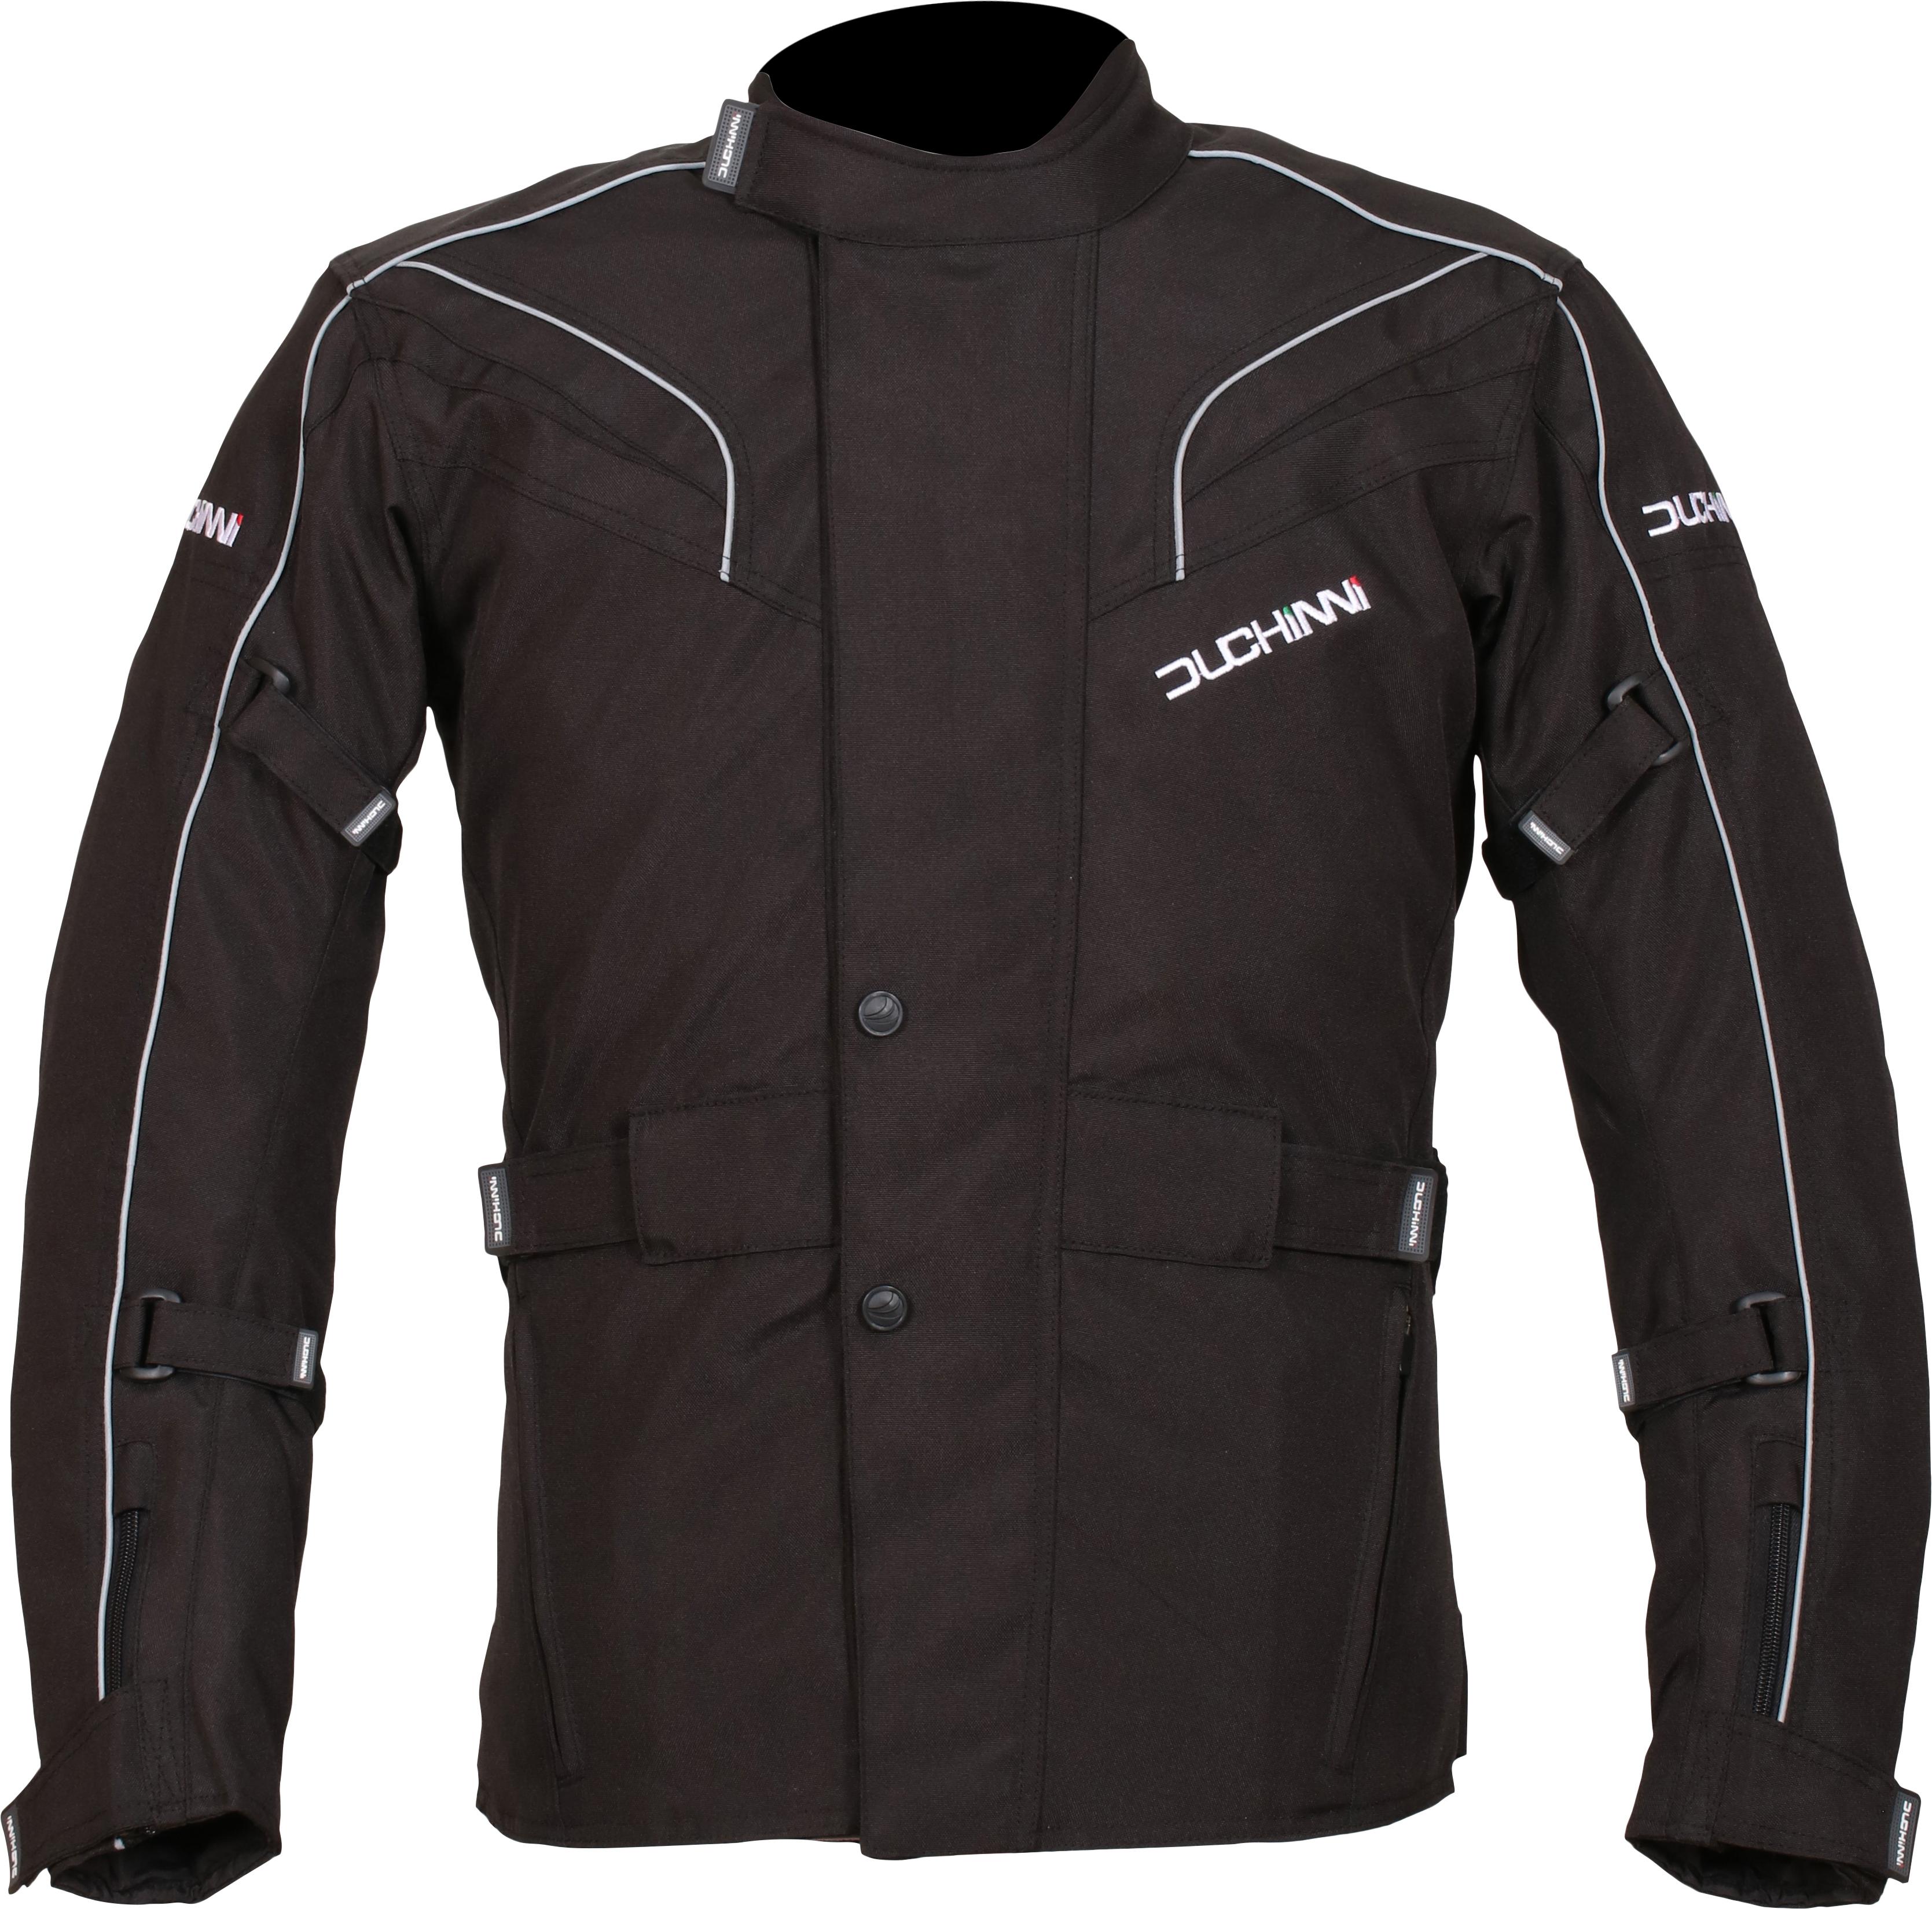 Duchinni Hurricane Motorcycle Jacket - Black, 2Xl